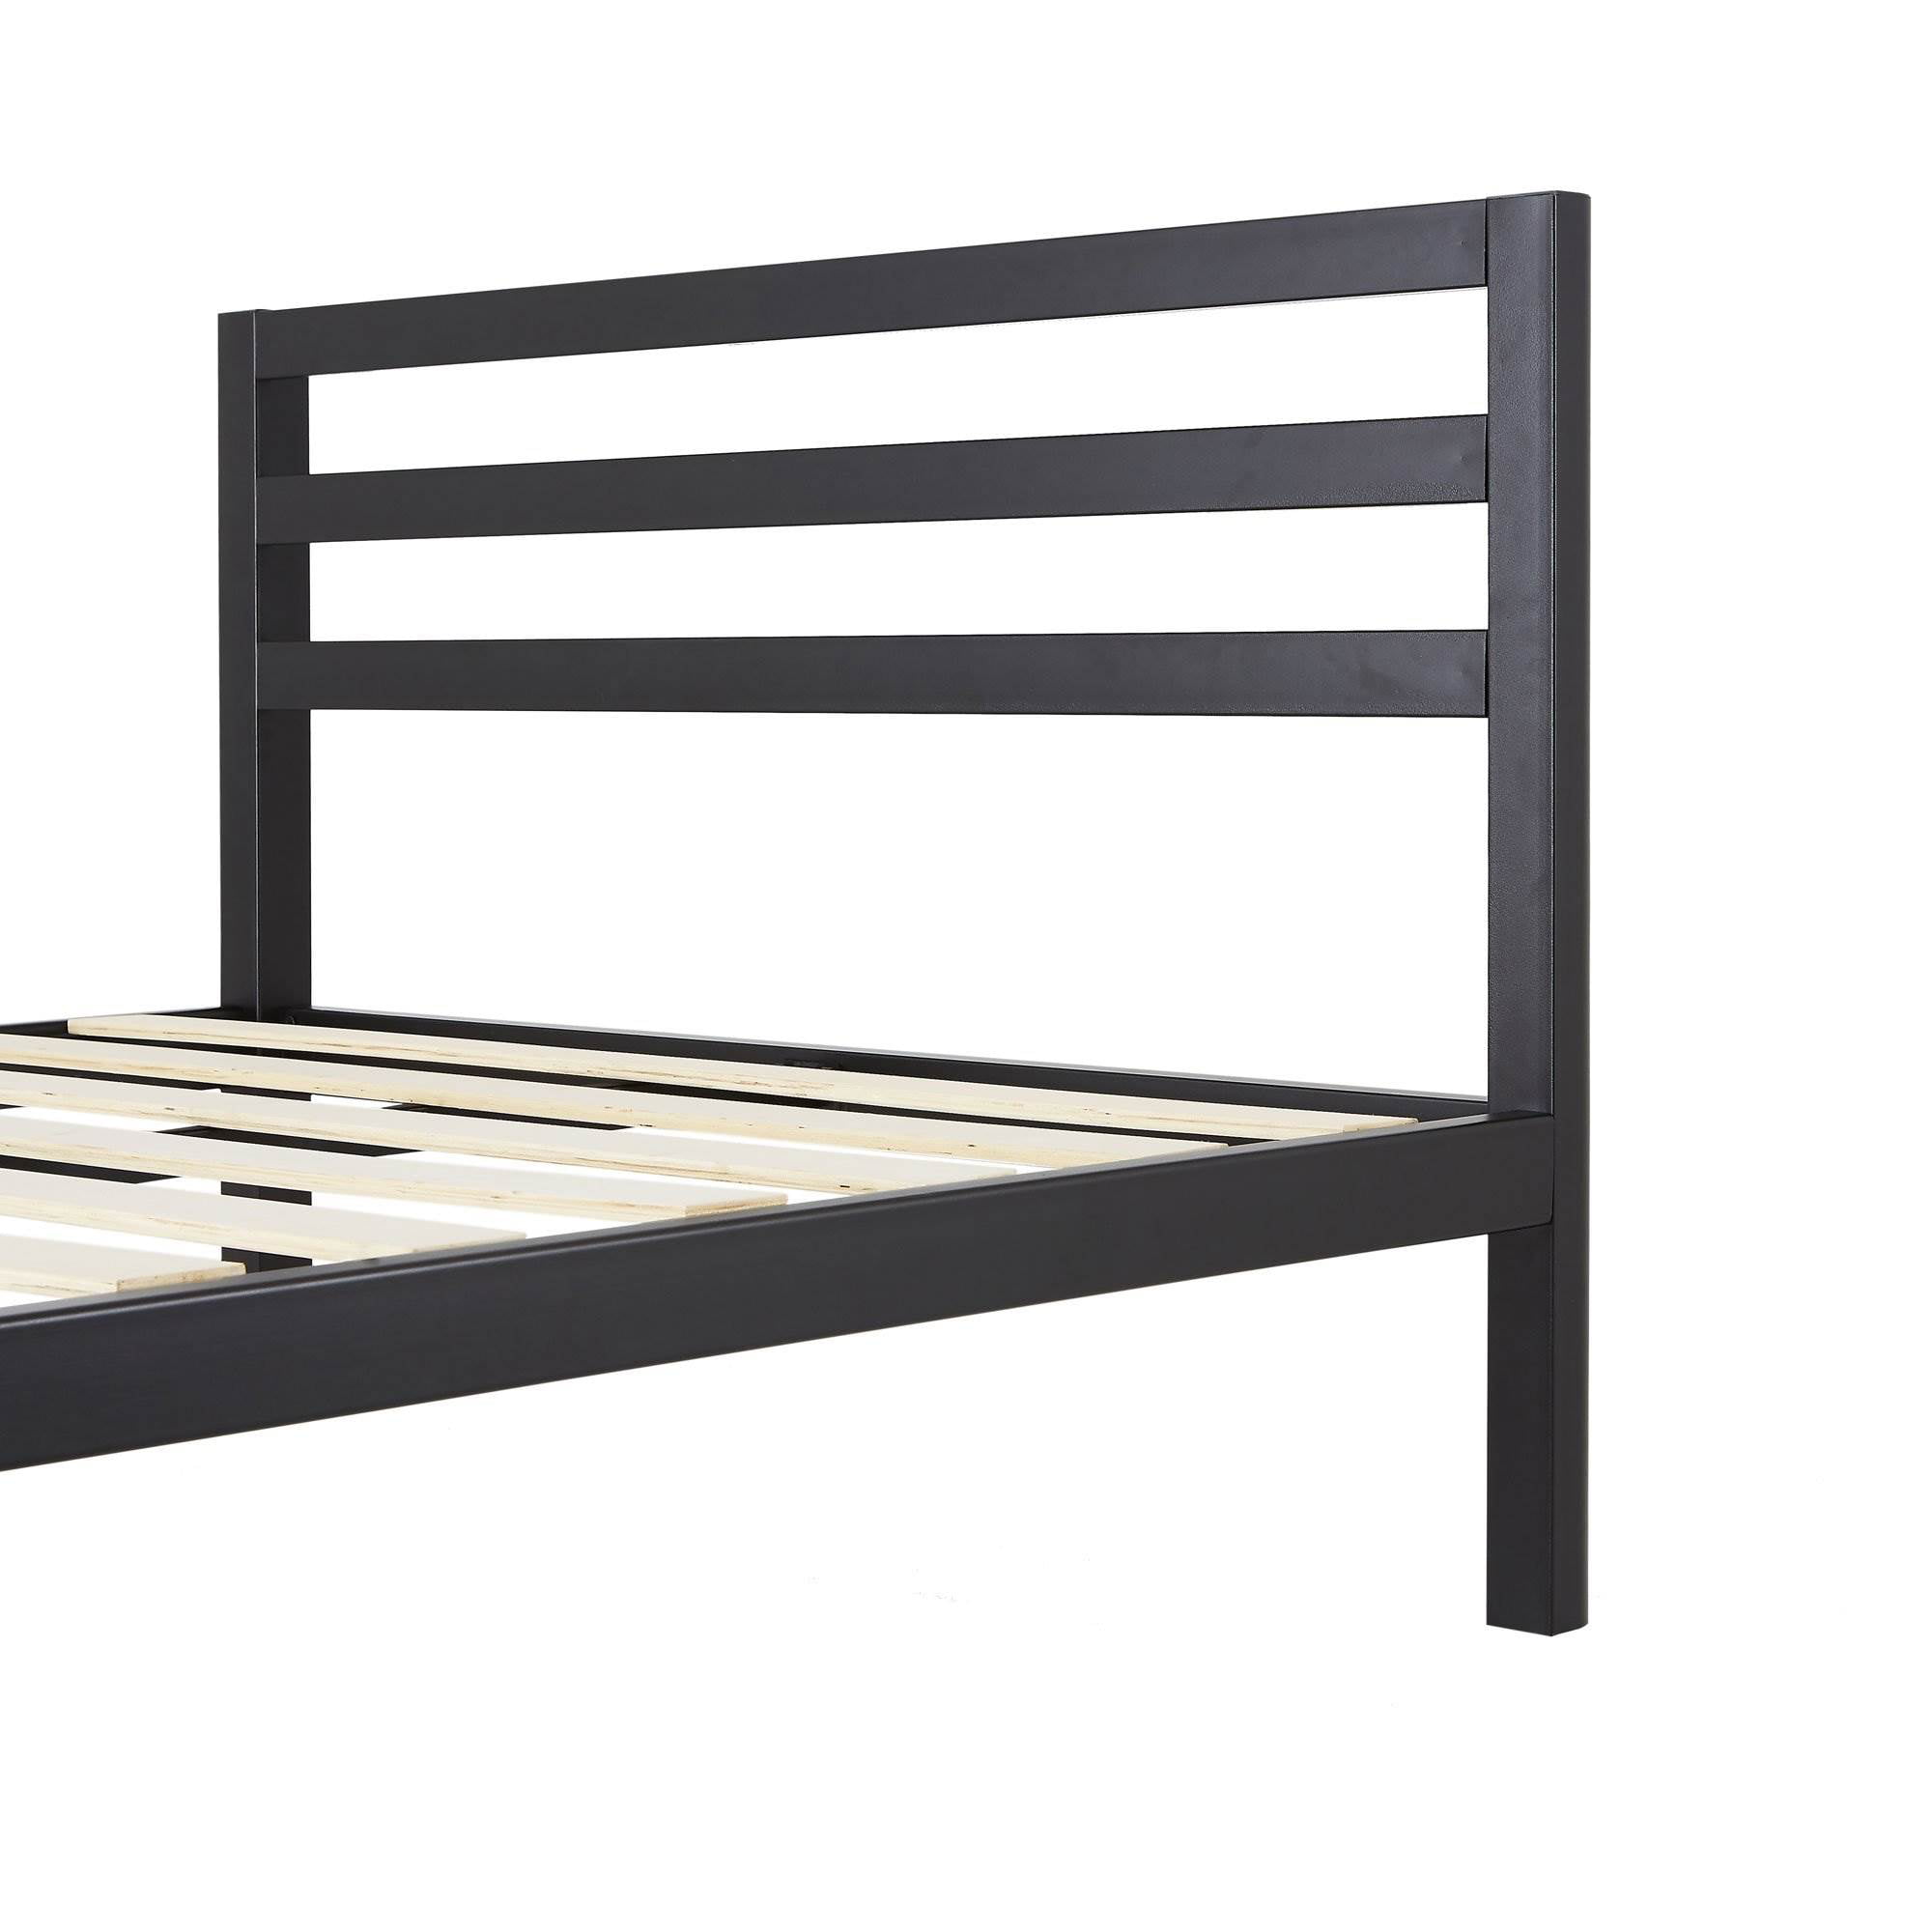 Intellibase Full Size Wooden Slat, Intellibase Bed Frame